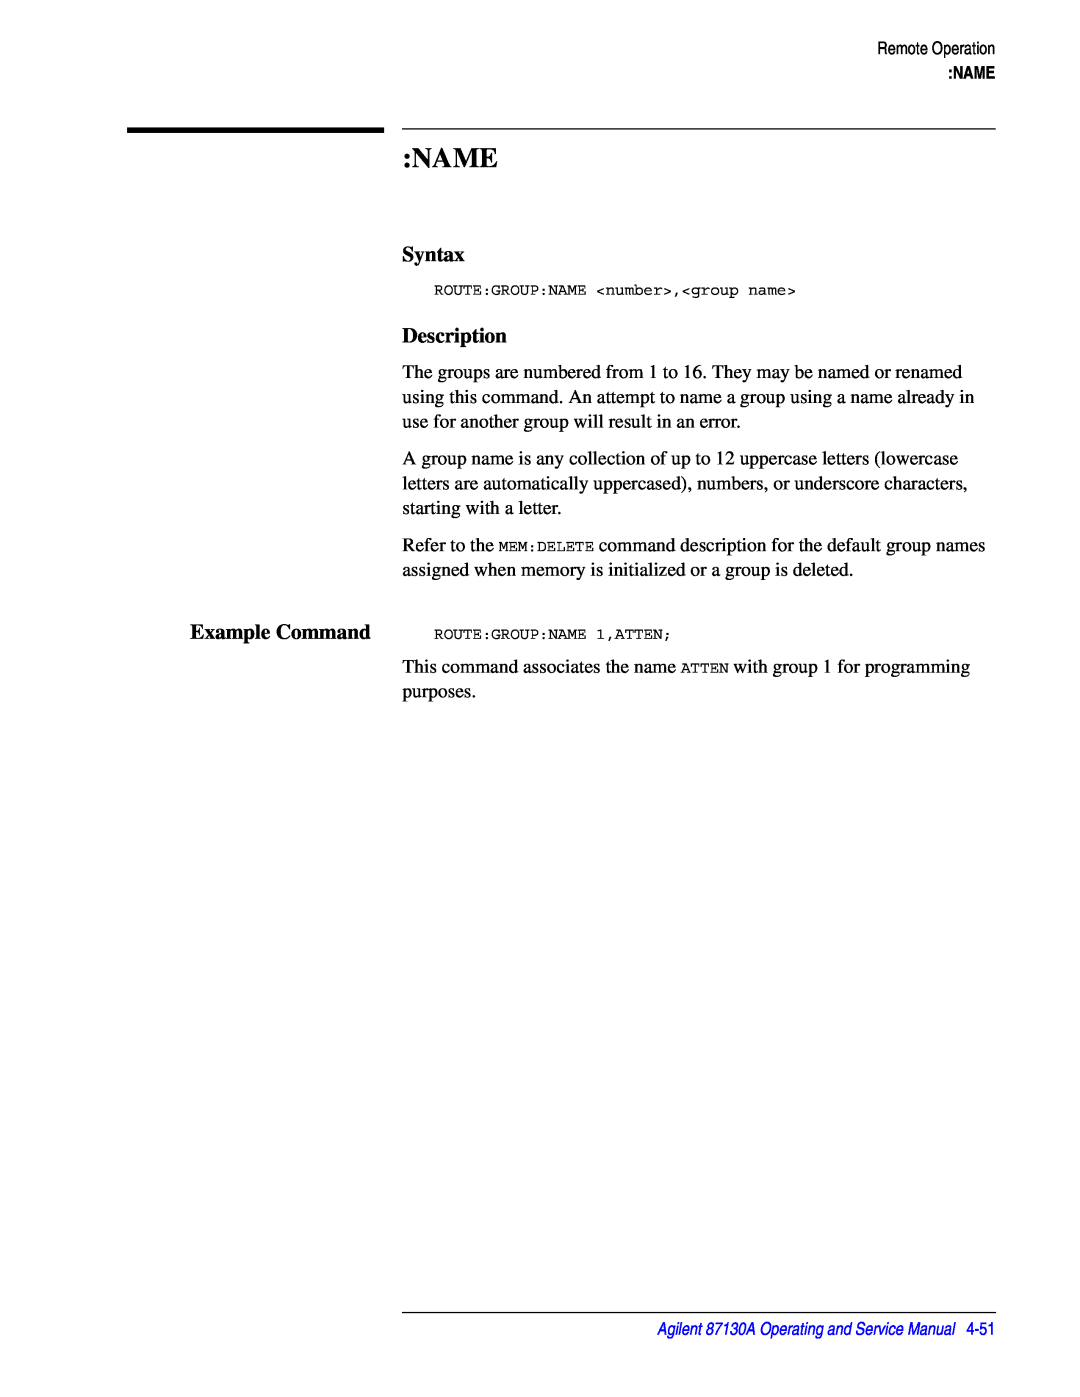 Agilent Technologies 87130A manual Name, Syntax, Description, Example Command 